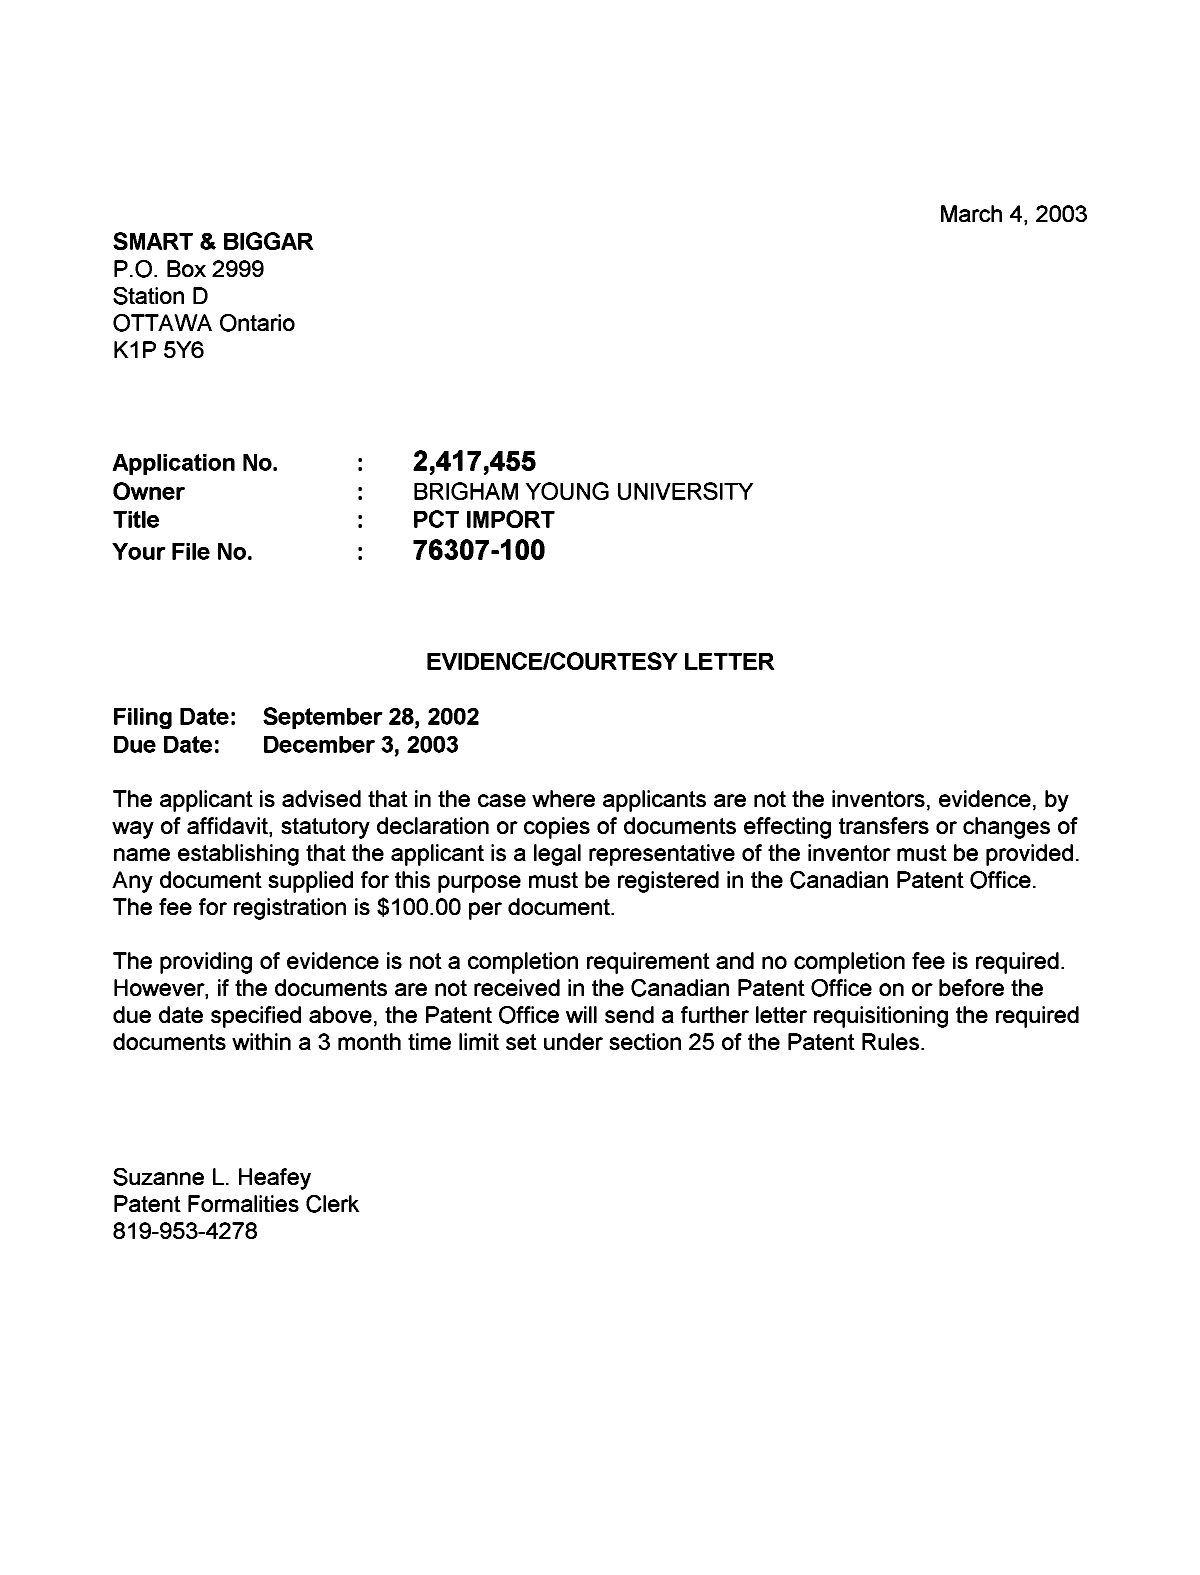 Canadian Patent Document 2417455. Correspondence 20030227. Image 1 of 1